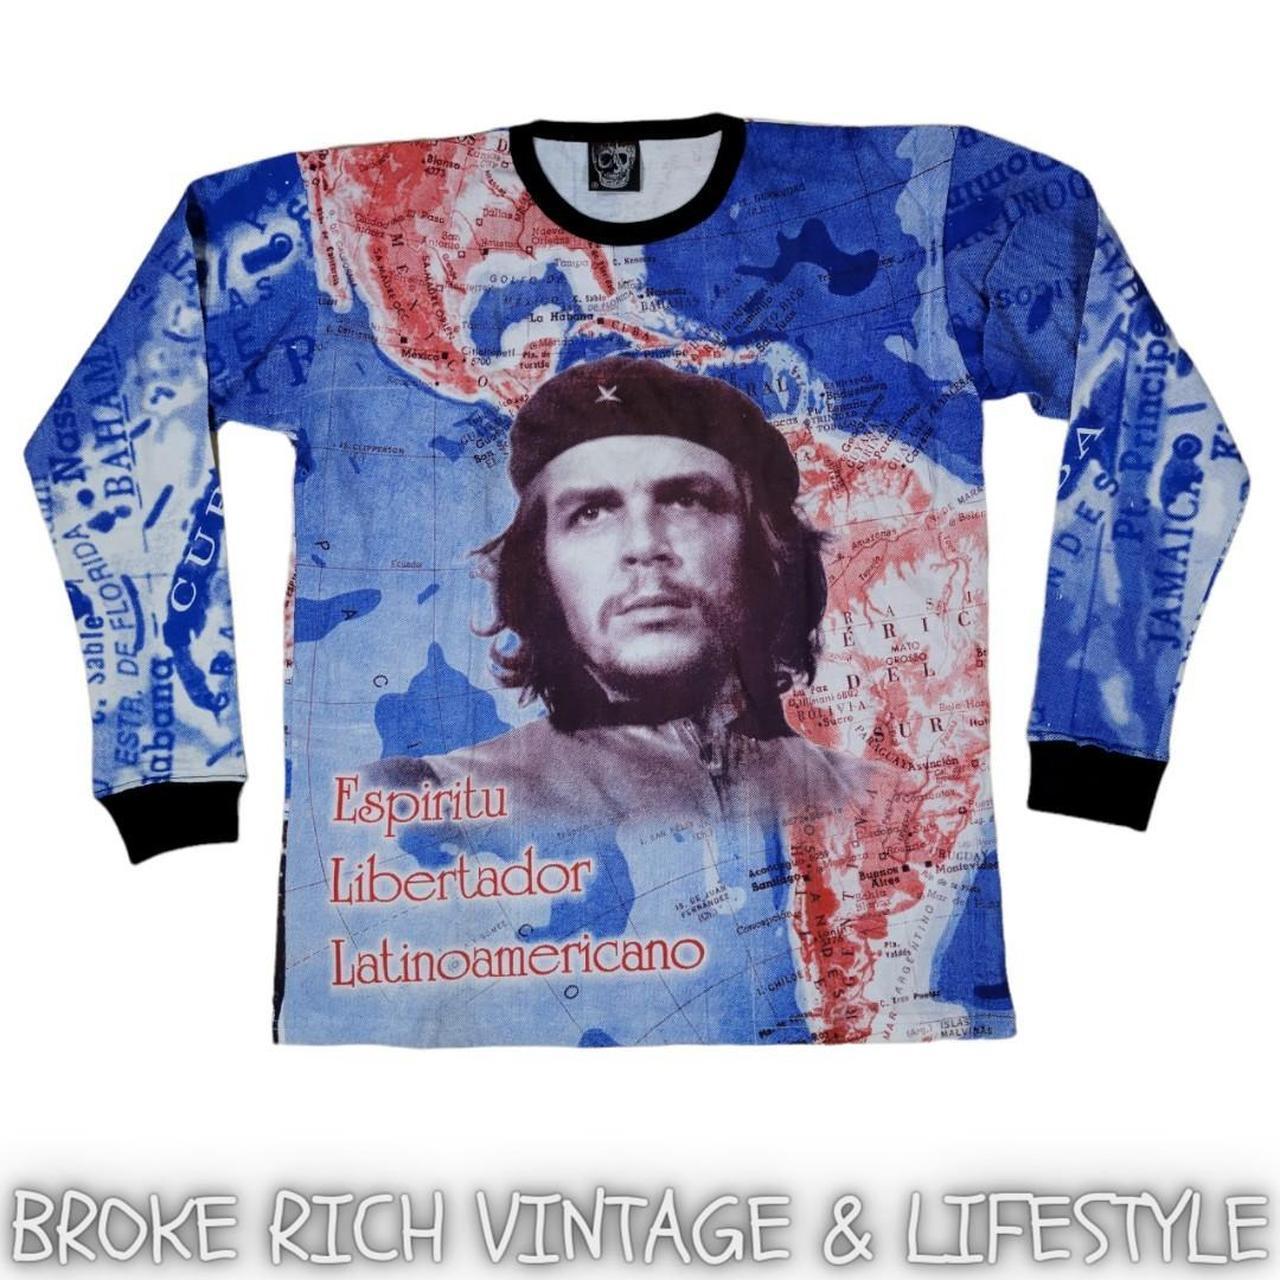 Vintage 80s Che Guevara shirt, super rare never seen - Depop